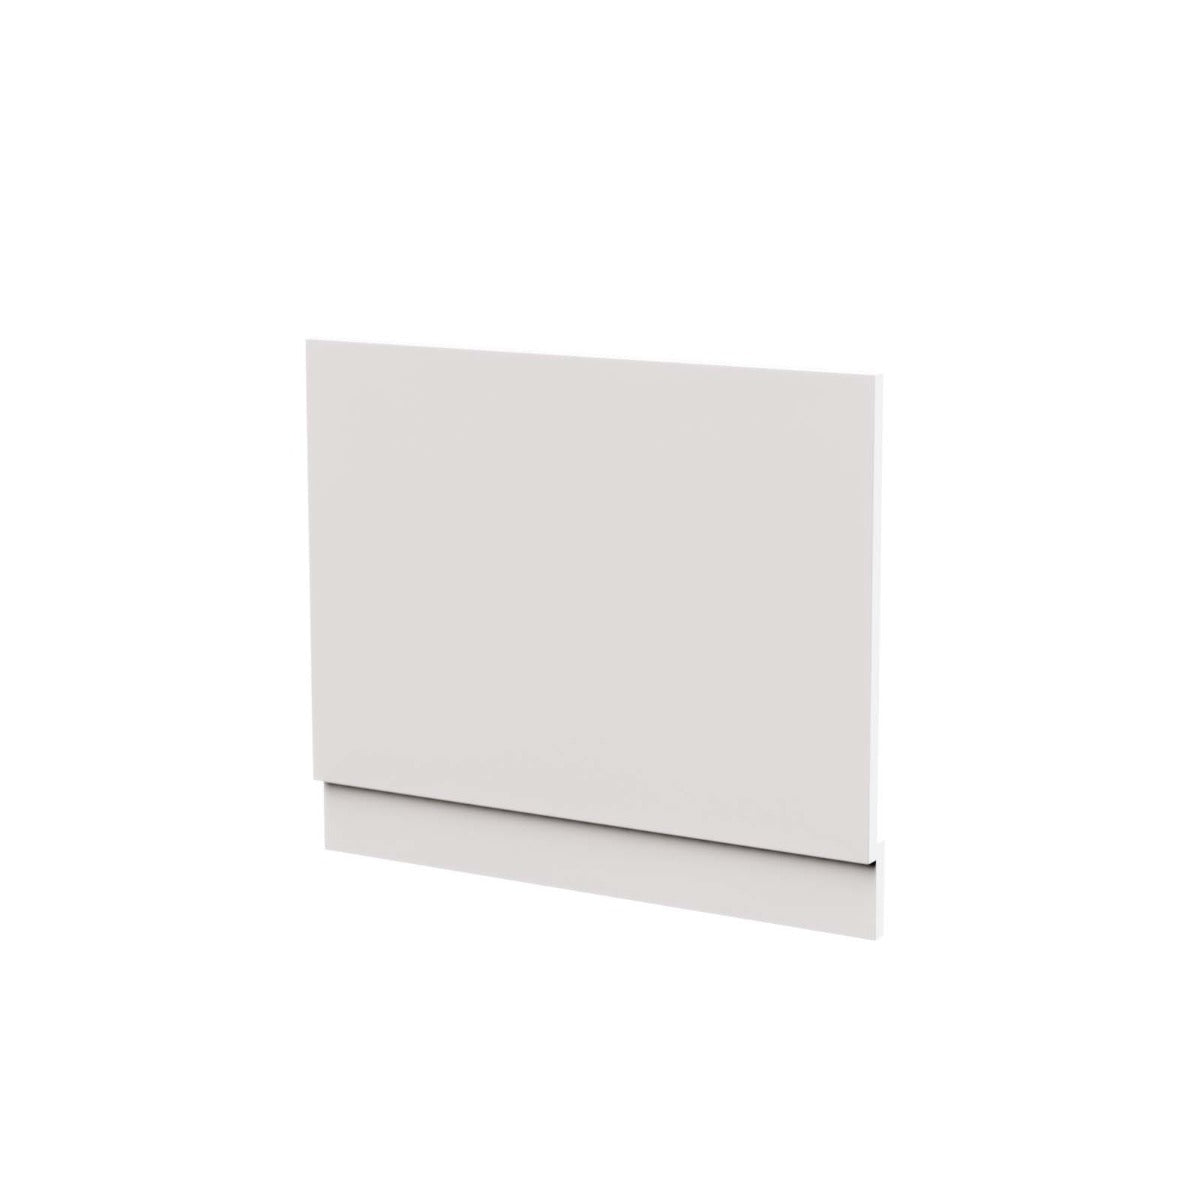 Gorge 800mm White High Gloss PVC End Panel 10mm Thickness + Plinth